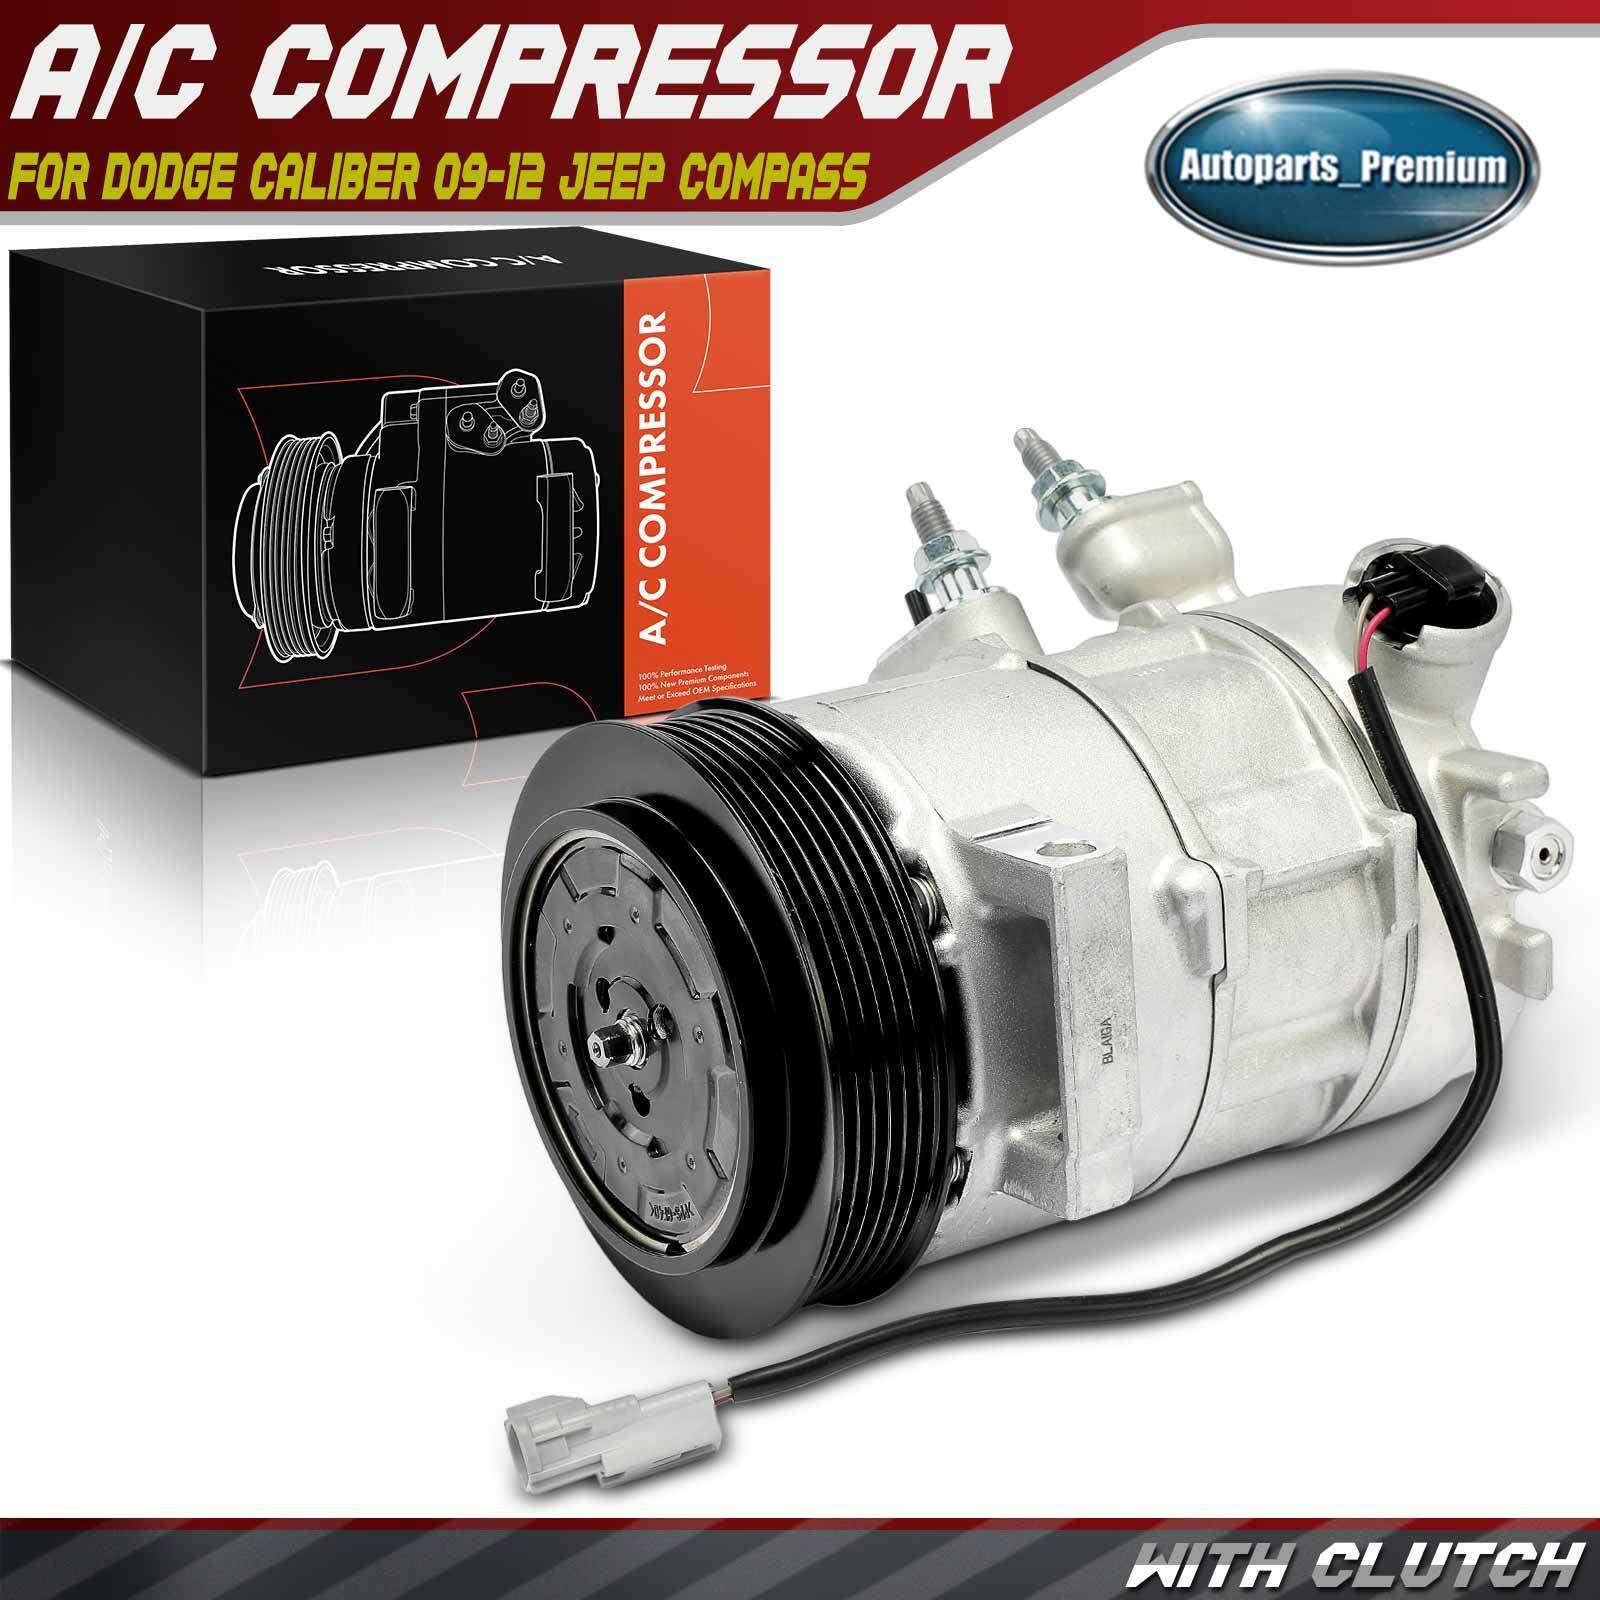 A/C AC Compressor w/ Clutch for Dodge Caliber 2009-12 Jeep Compass Patriot 09-17